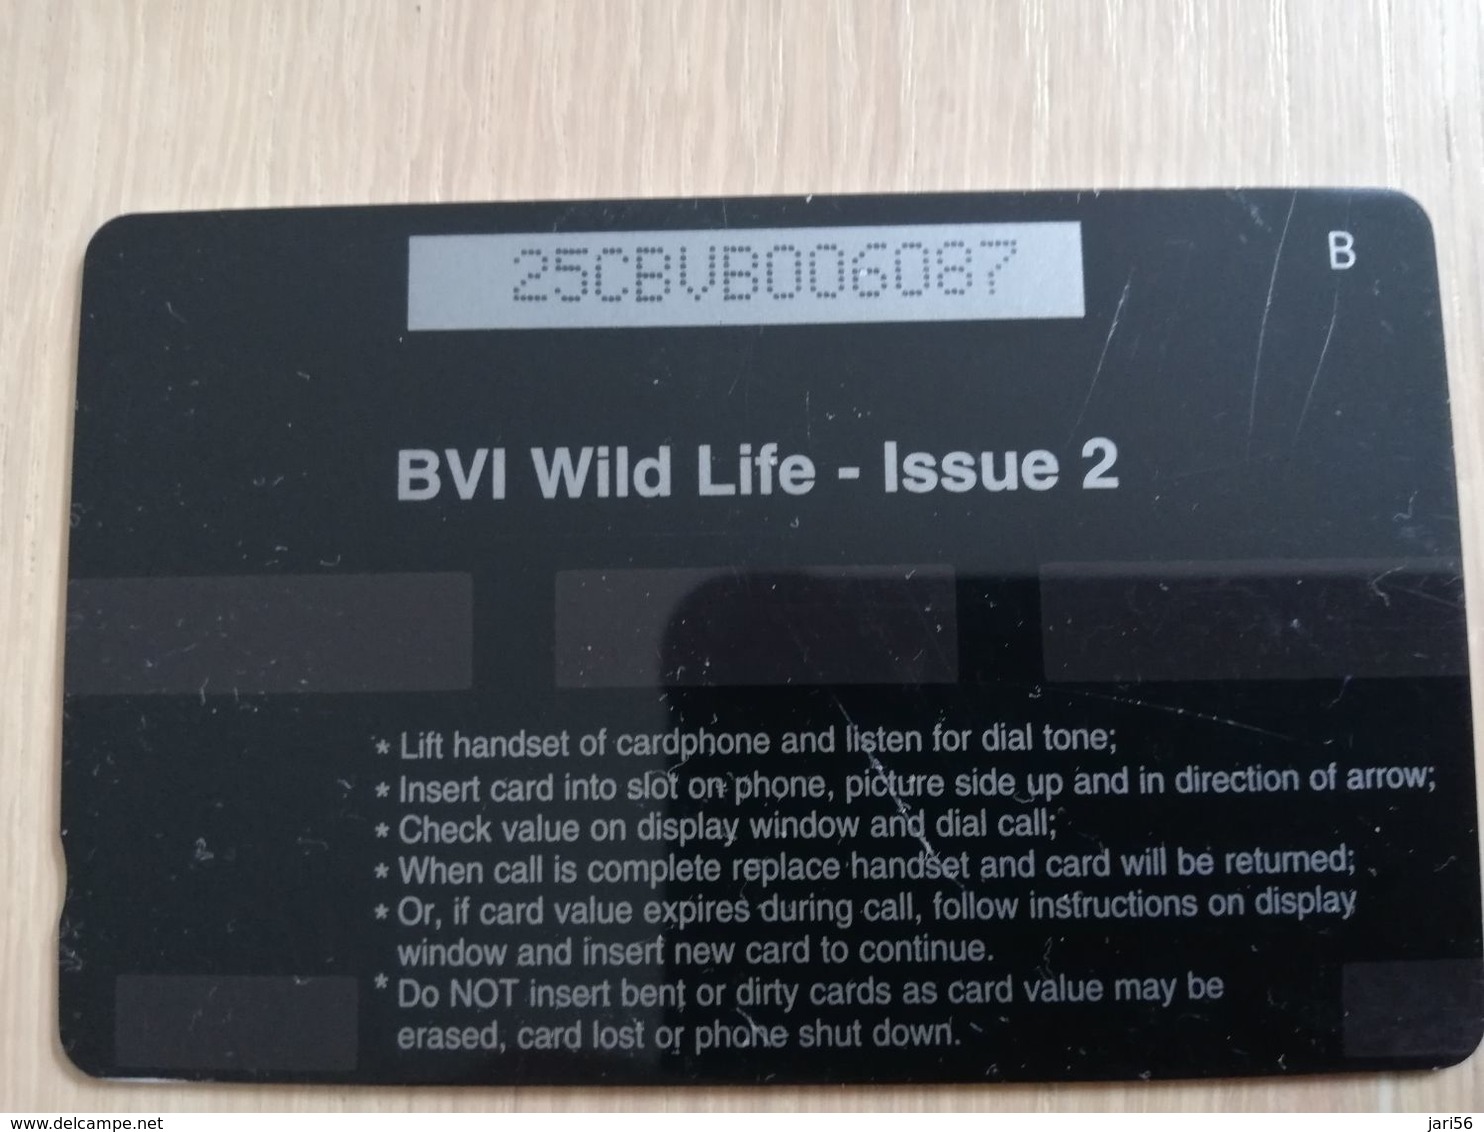 BRITSCH VIRGIN ISLANDS  US$ 20  BVI-25B   PARROTH FISH    25CBVB     Fine Used Card   ** 2680** - Virgin Islands